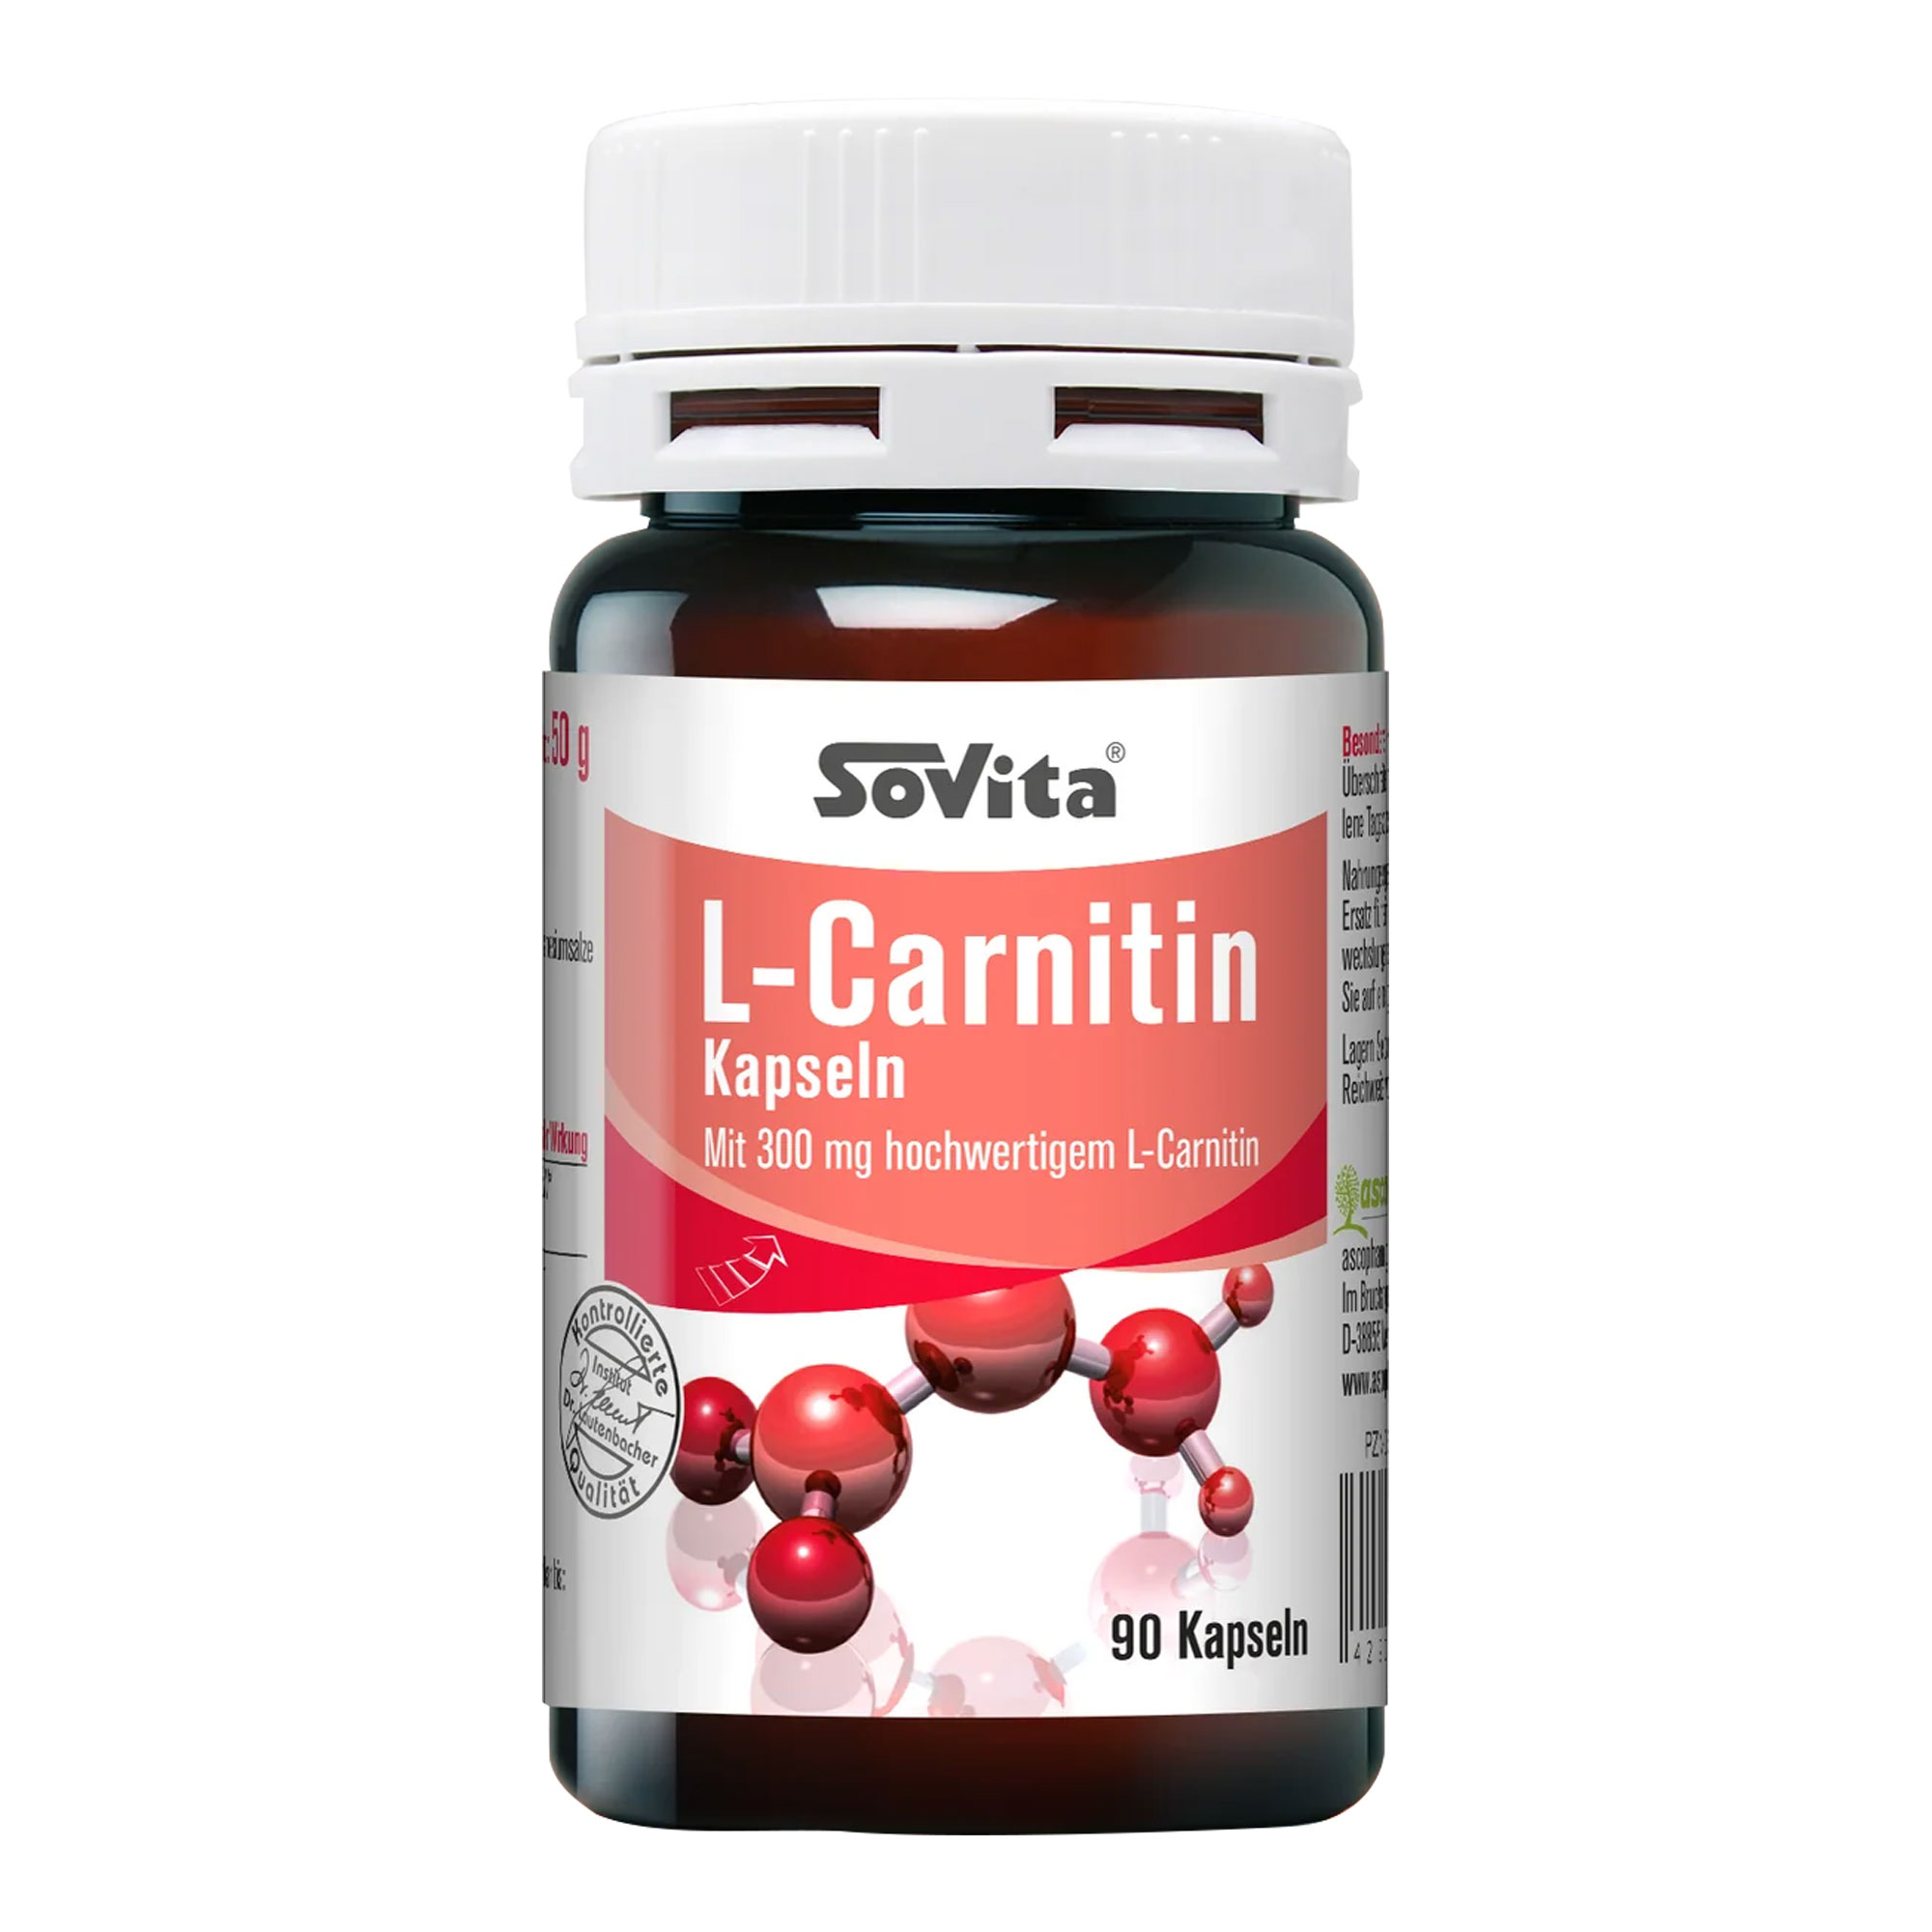 Nahrungsergänzungsmittel mit 300 mg hochwertigem L-Carnitin & 145 mg L-Tartart pro Kapsel.